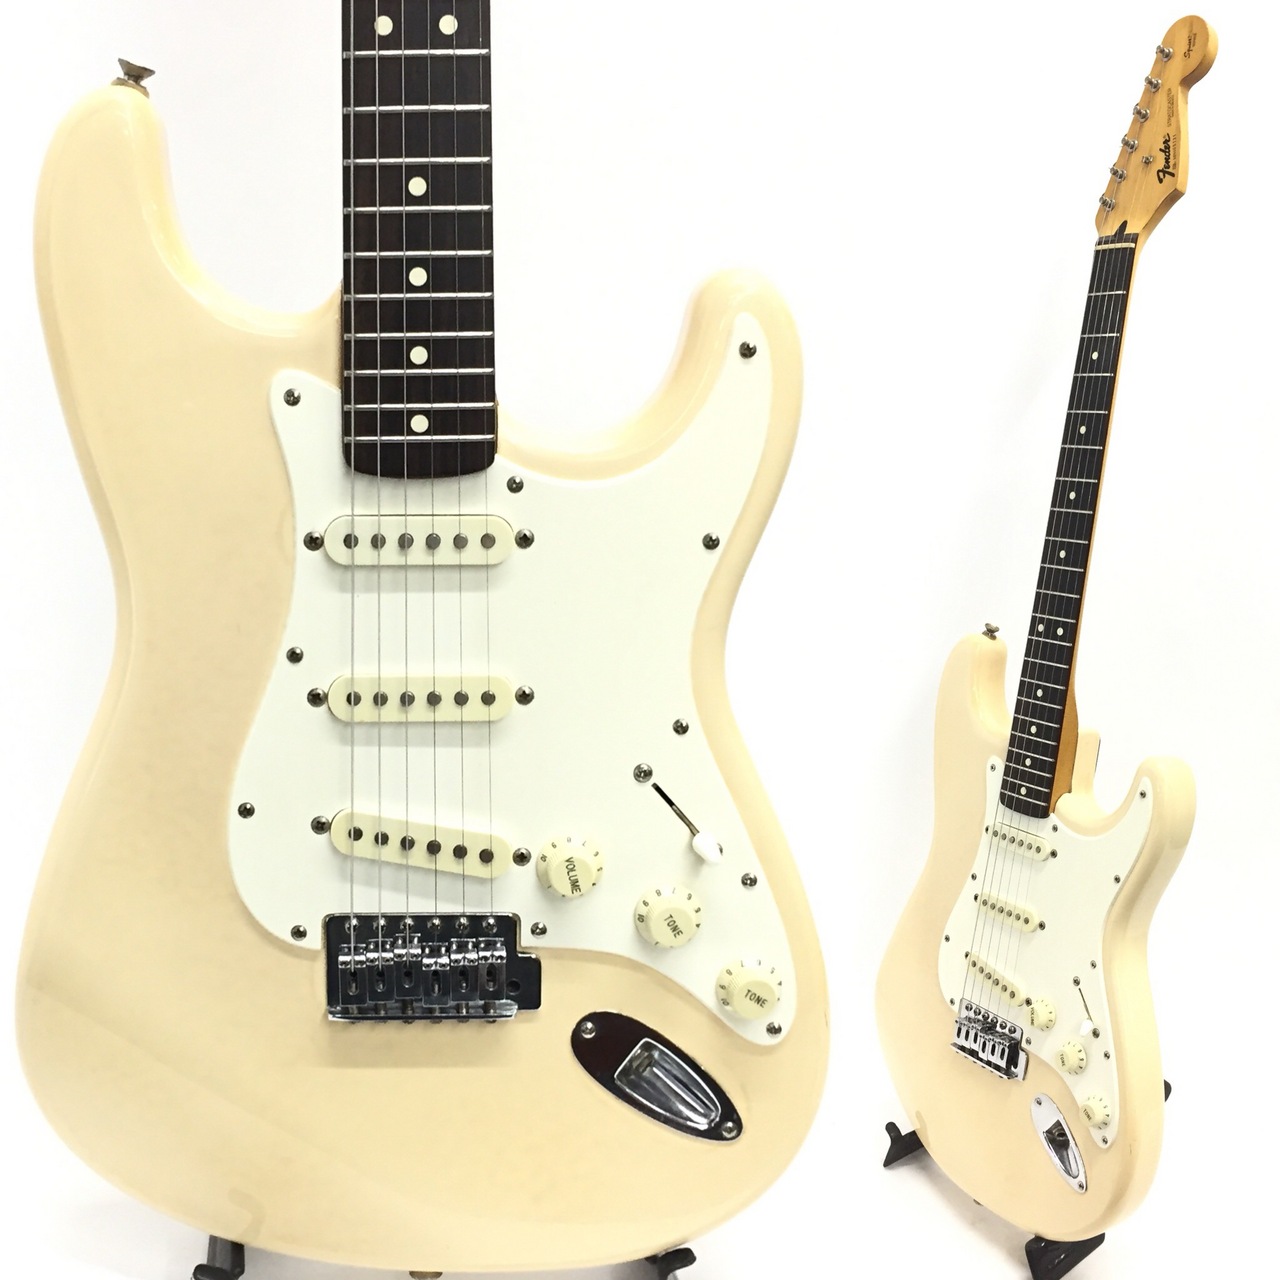 Fender Mexico Squier Series Stratocaster 1994年製買取ました